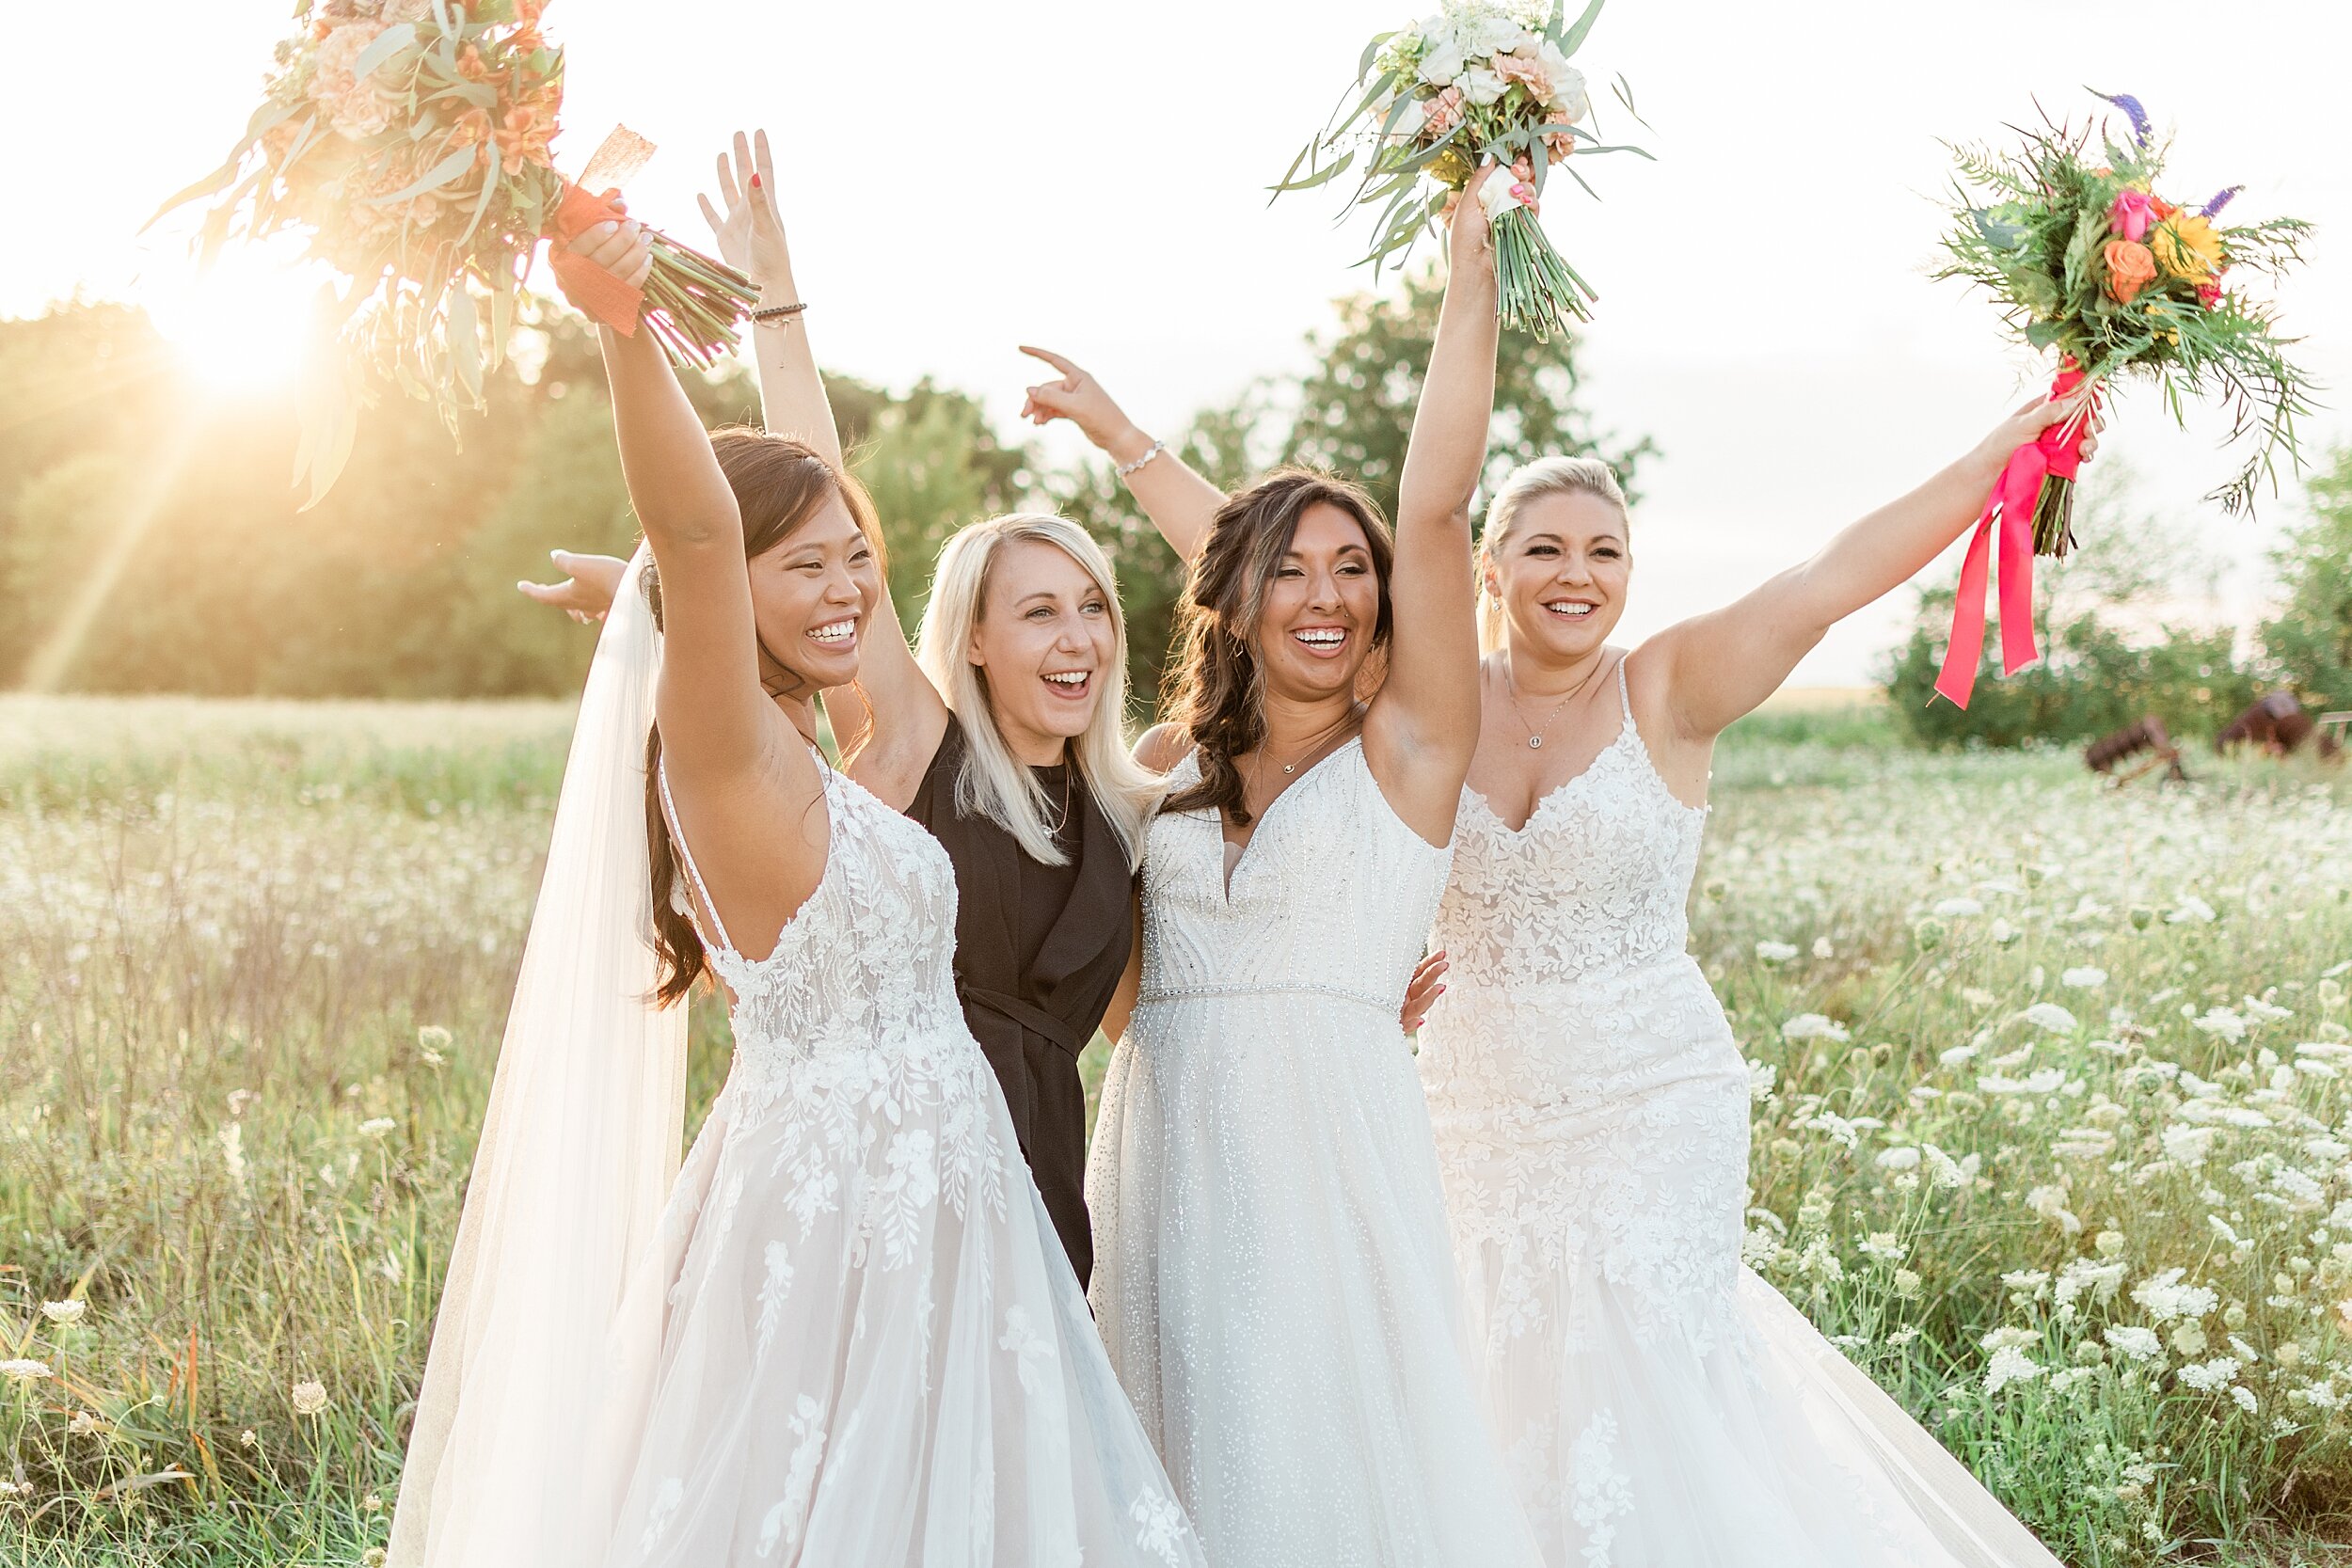 sisters-bridal-boutique-laudicks-jewelry-betsys-bouquets-van-wert-ohio-wedding-photographer-the-association-photography_6922.jpg